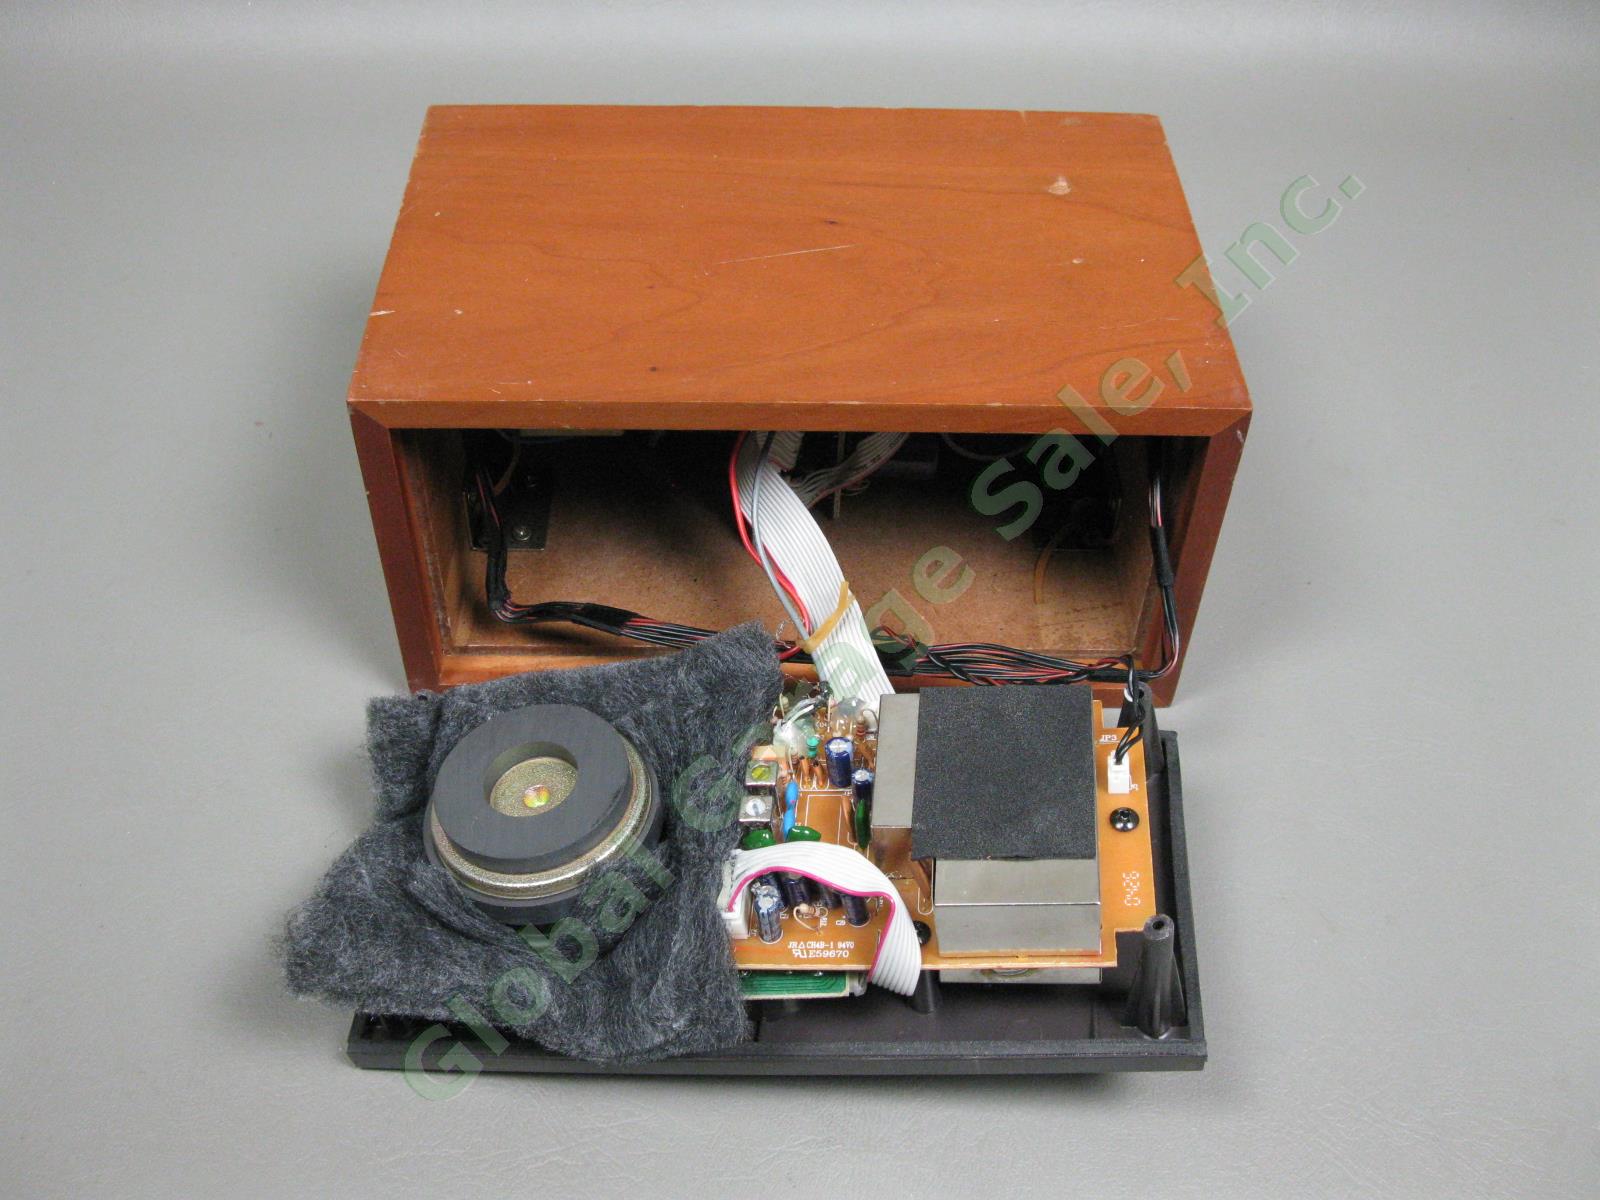 Tivoli Audio Model Two Henry Kloss AM/FM Radio Subwoofer Speakers Tested IWC NR 2